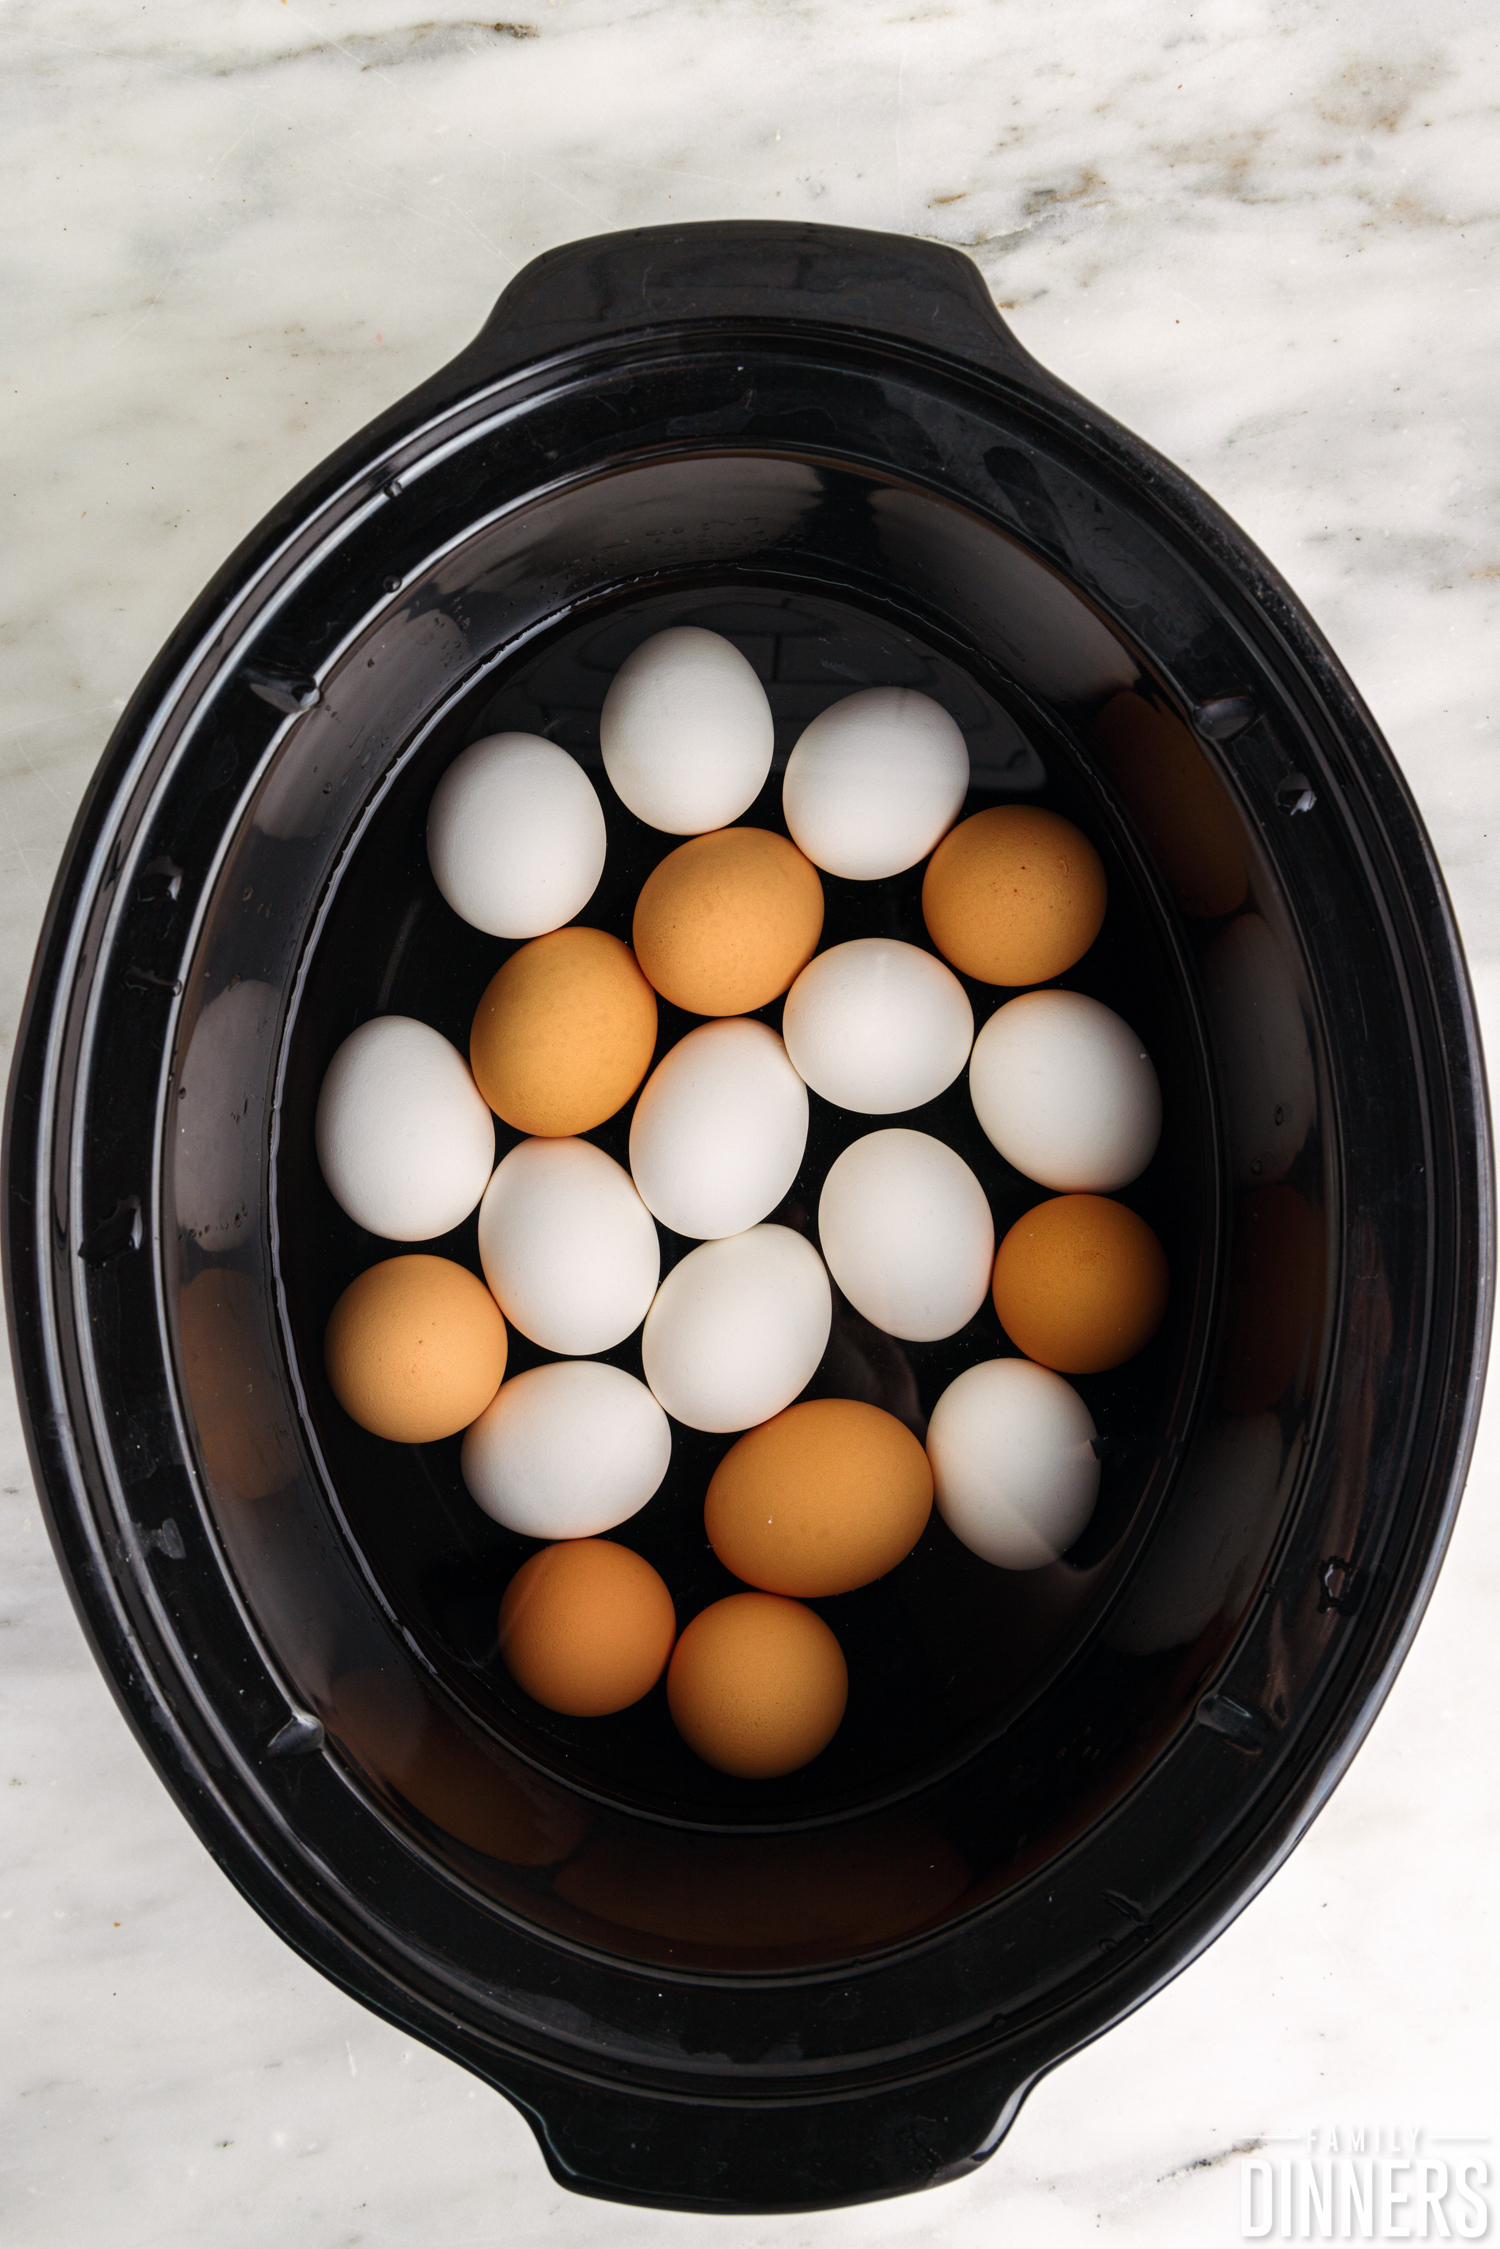 eggs in a crock pot